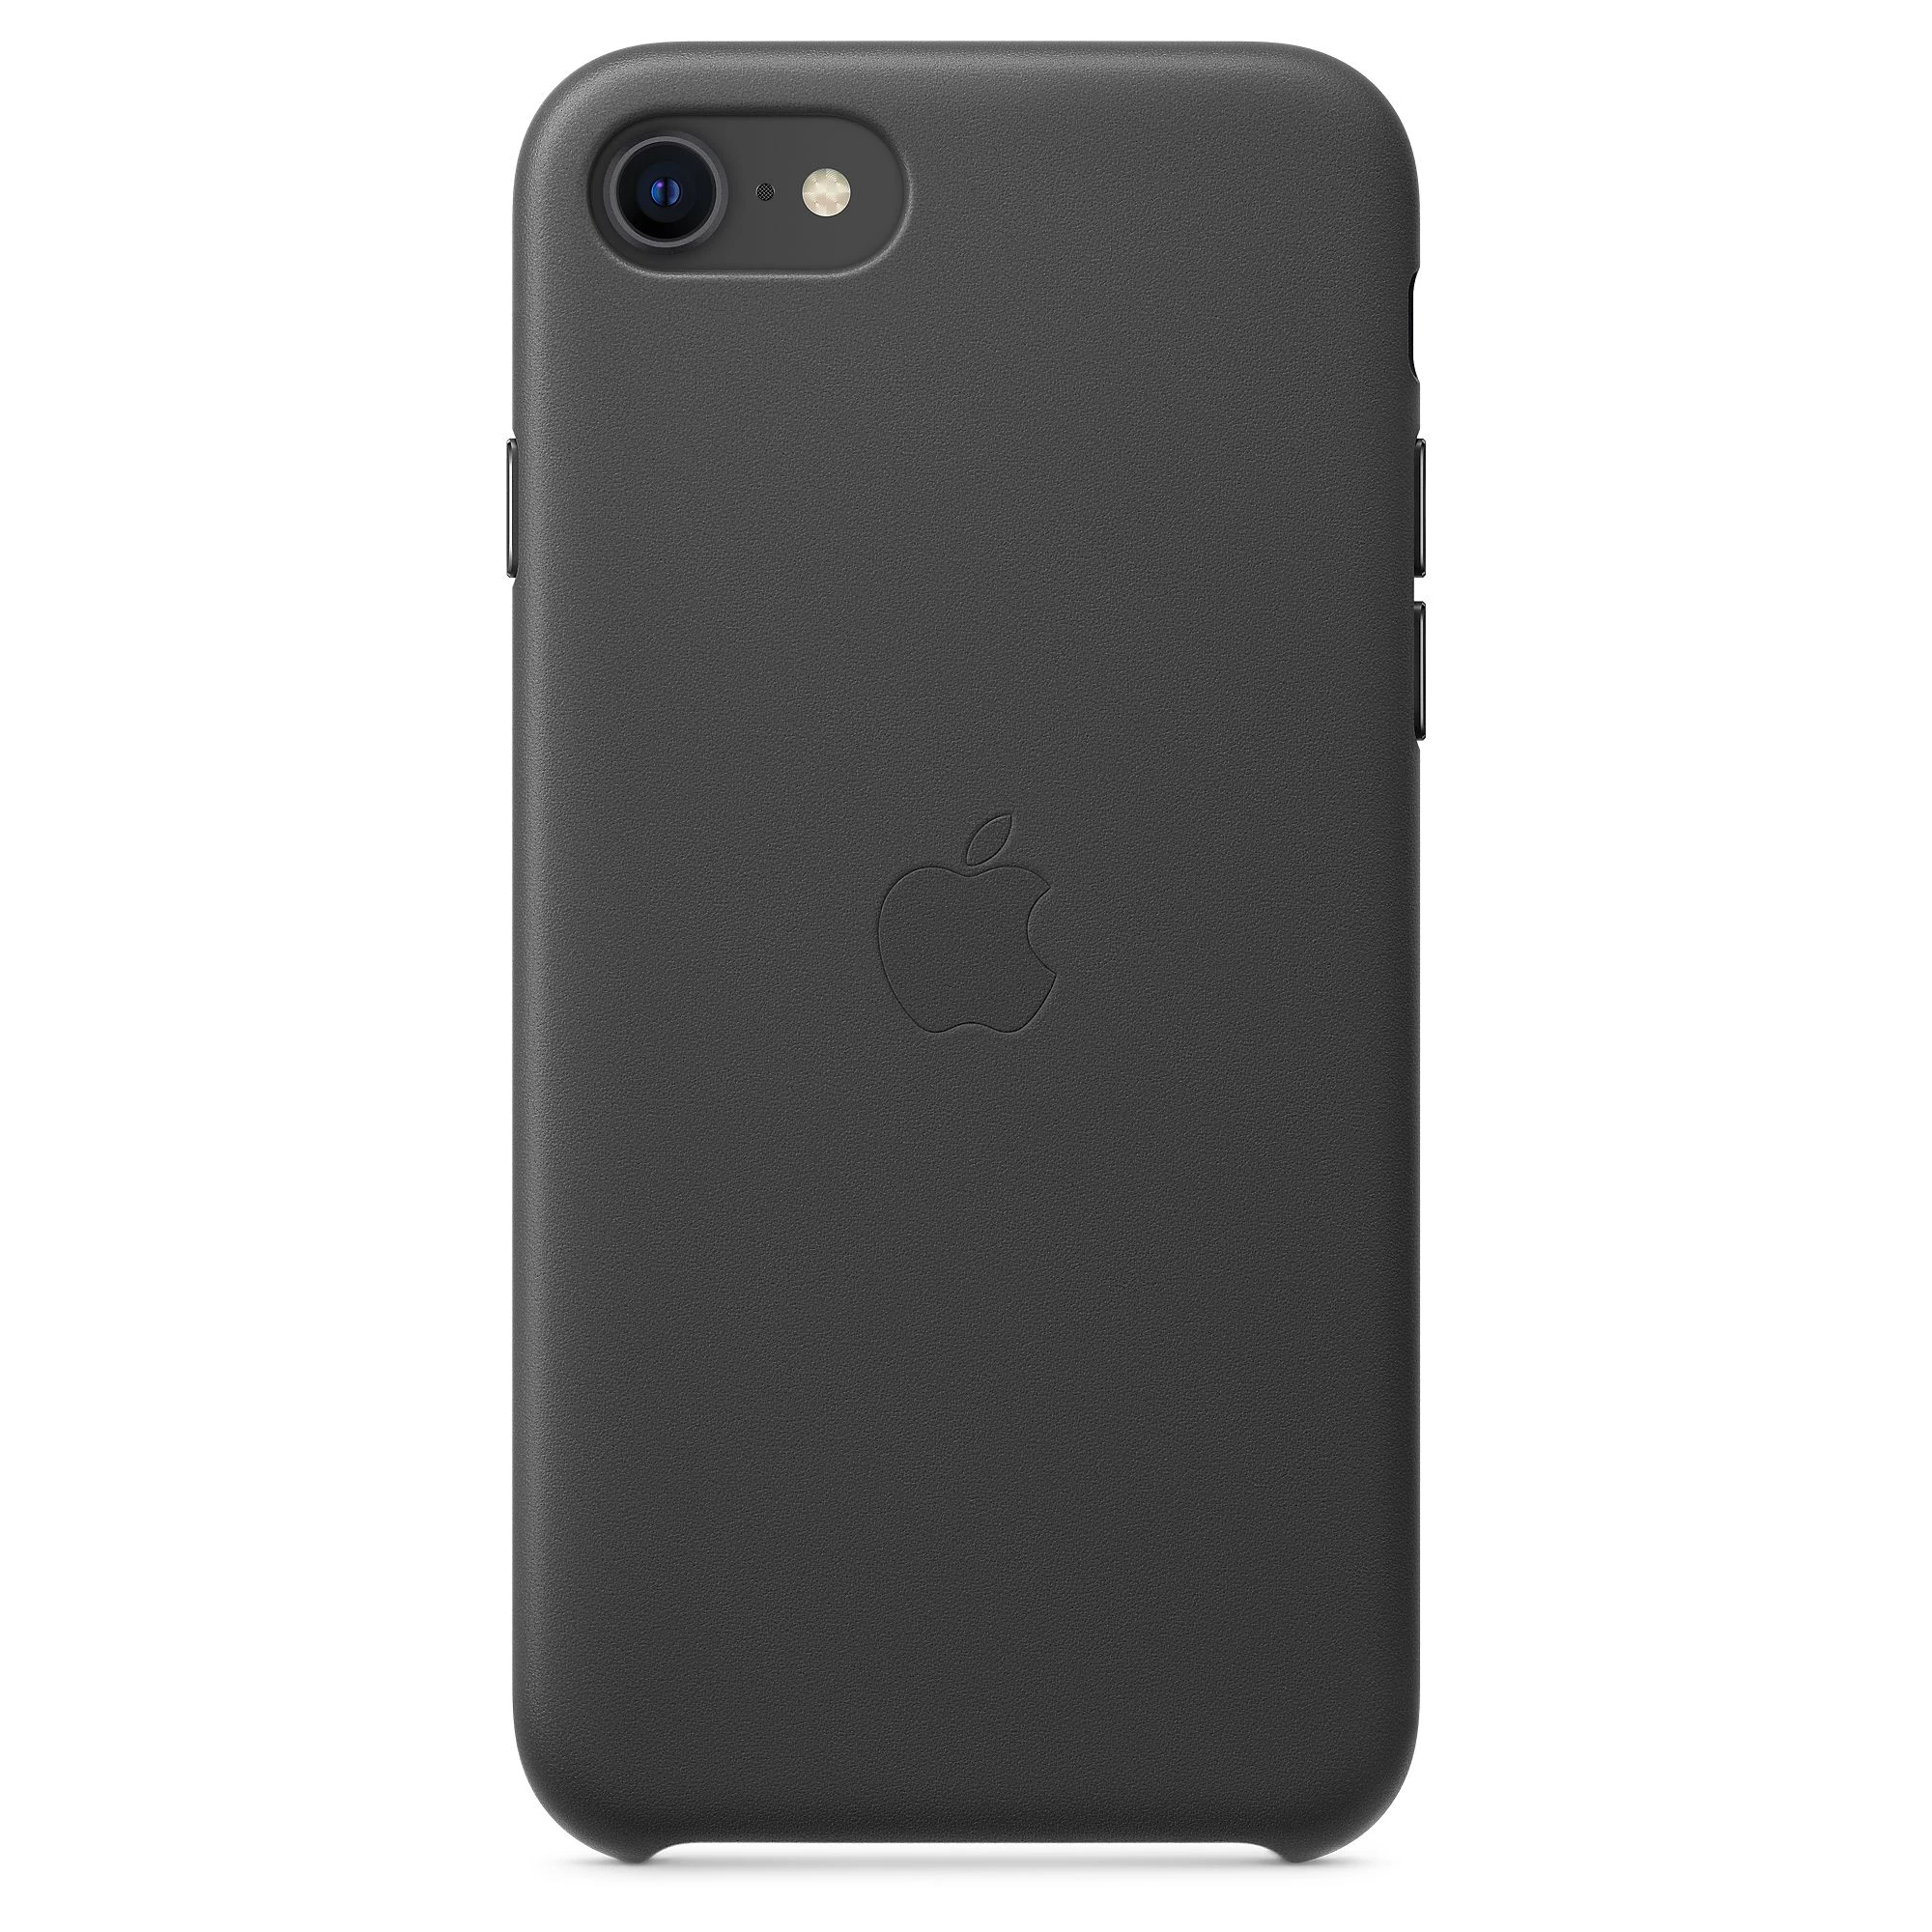 Apple iPhone SE Leather Case - Black (MXYM2)